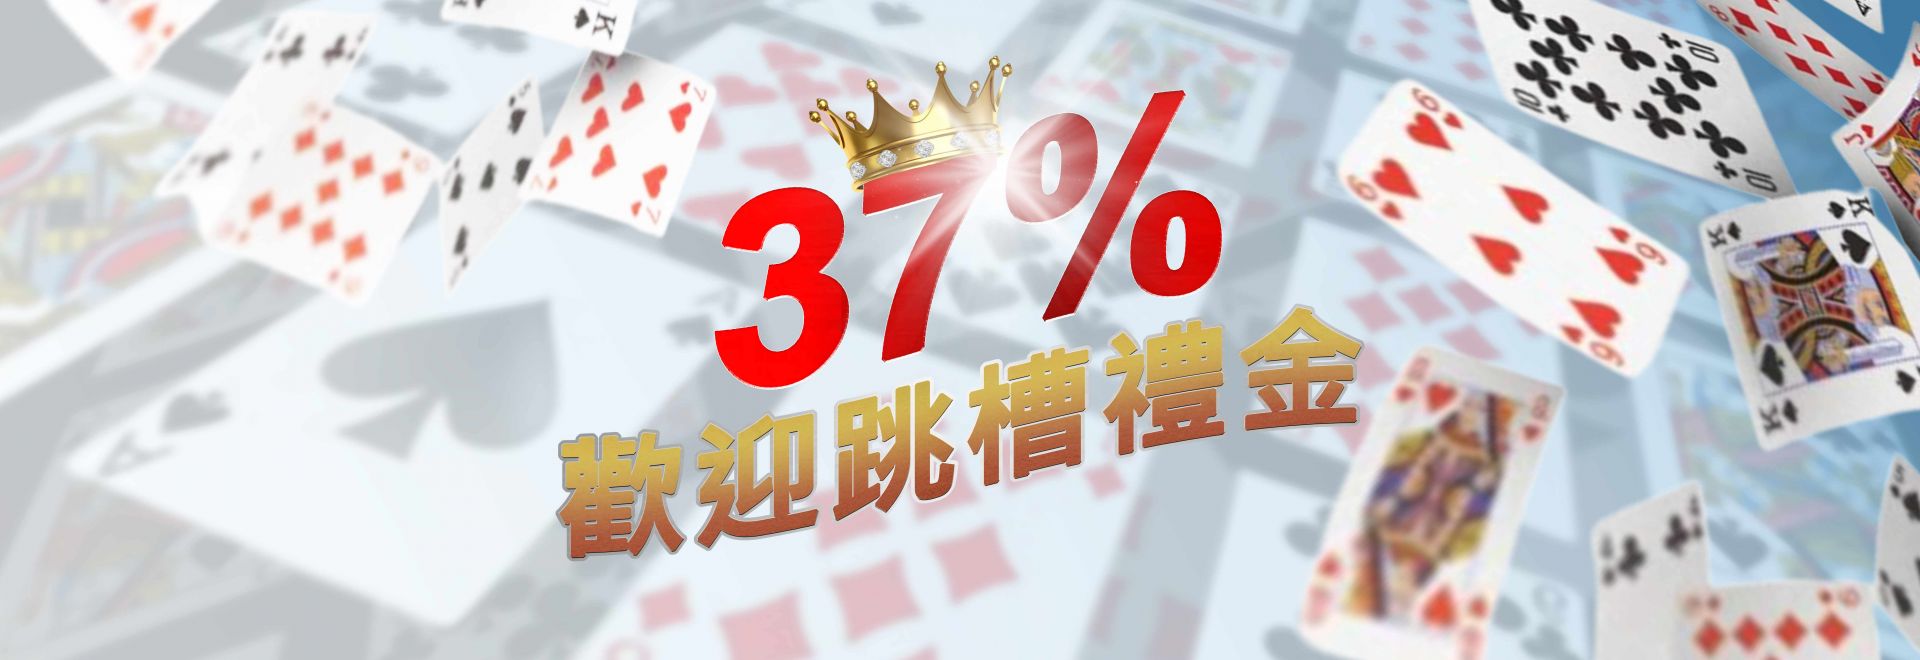 V7-bet娛樂城37%跳槽禮金